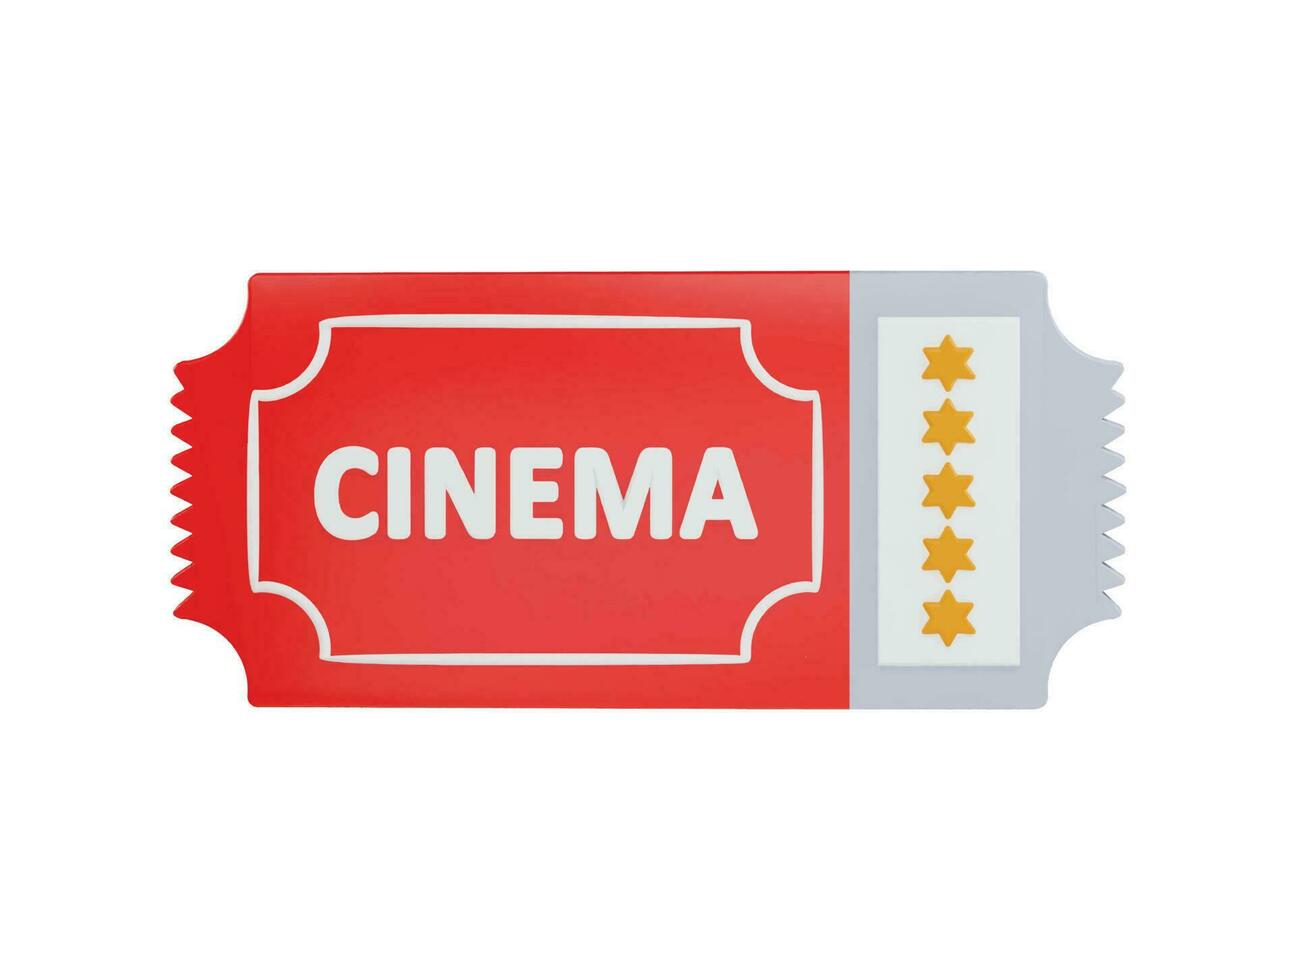 Kino Fahrkarte mit Sterne Symbol 3d Rendern Vektor Illustration